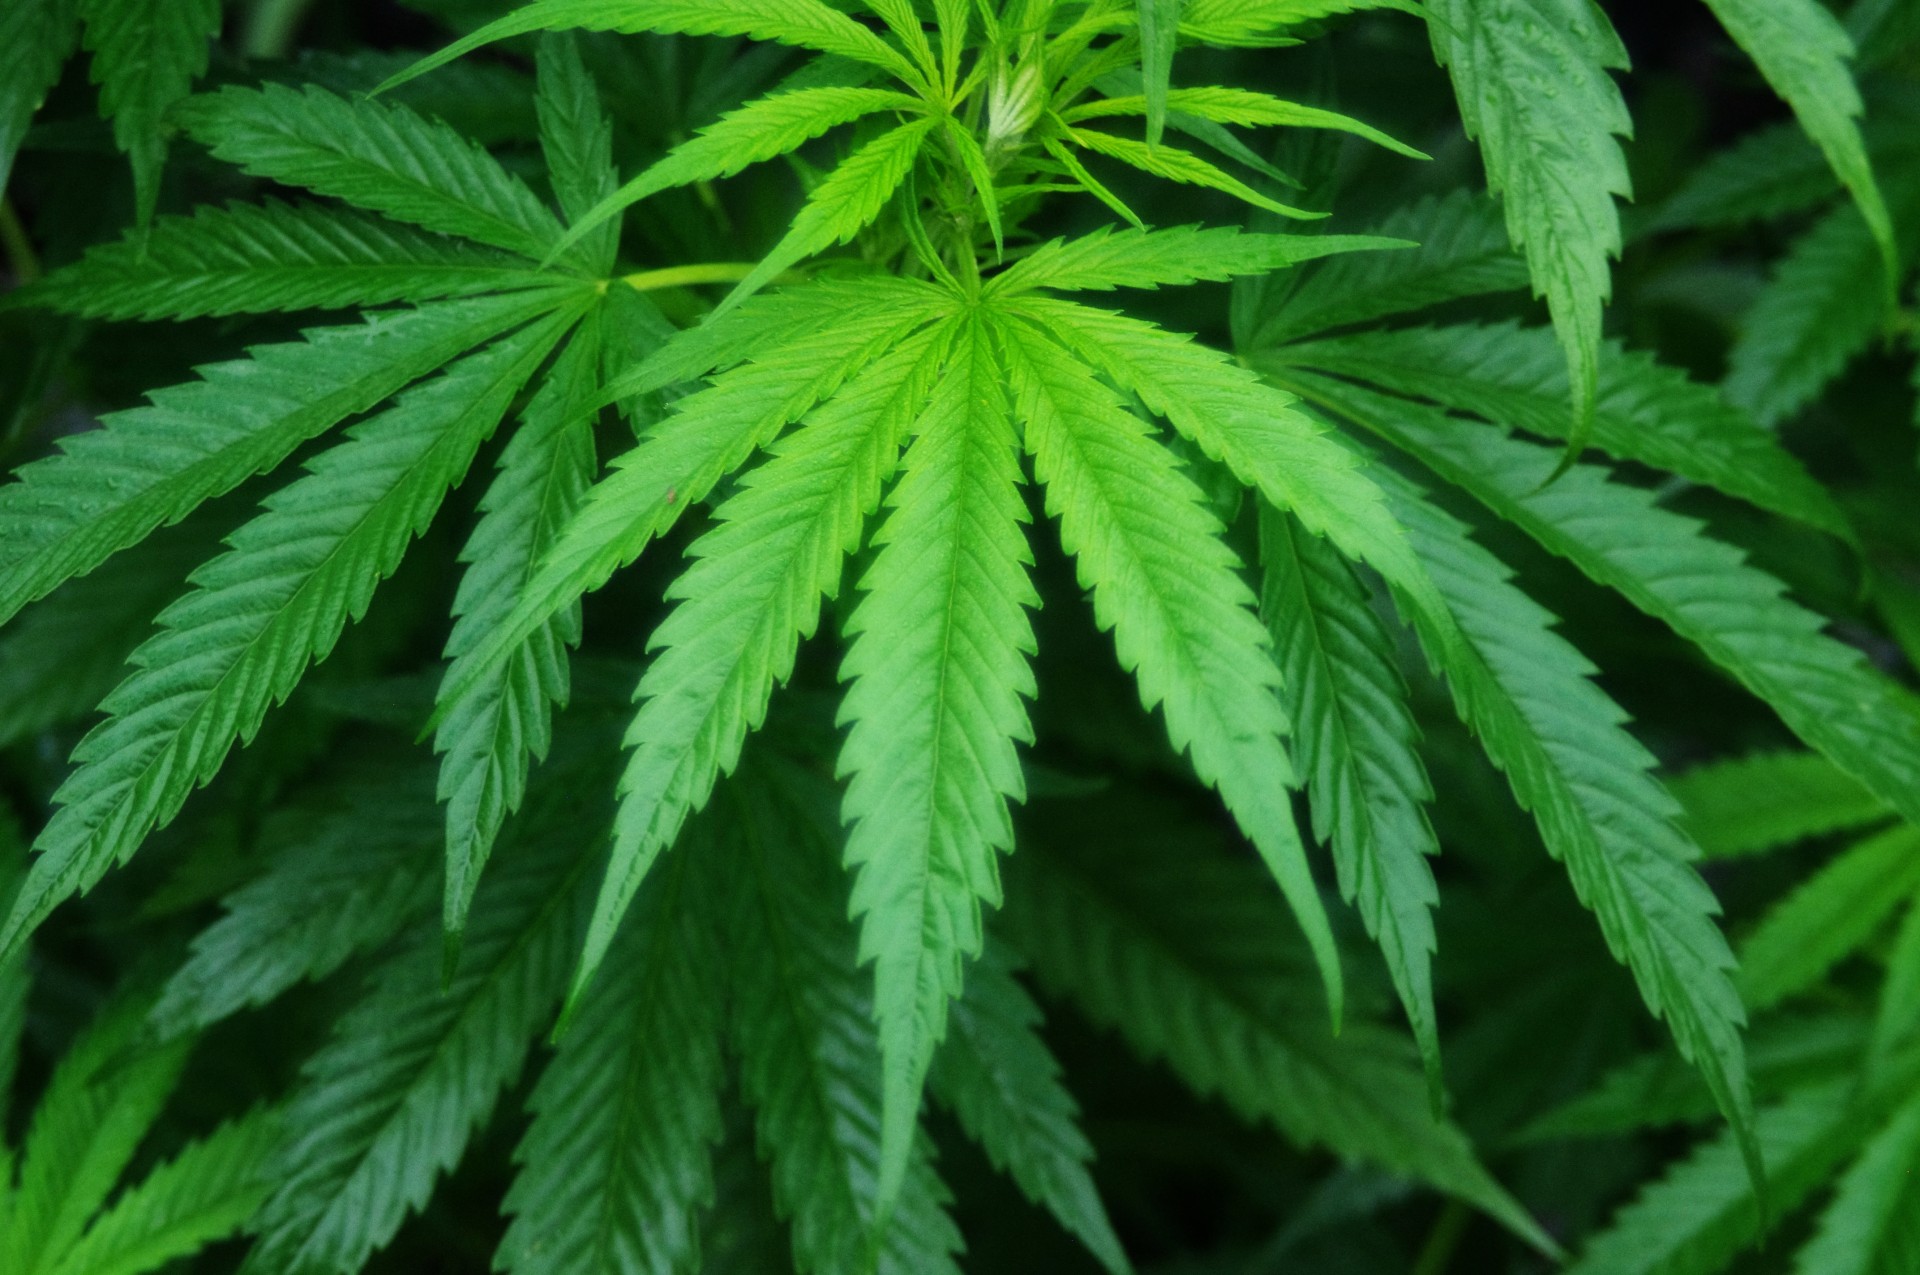 Amid confusion, legalized medical marijuana helps Wisconsinites